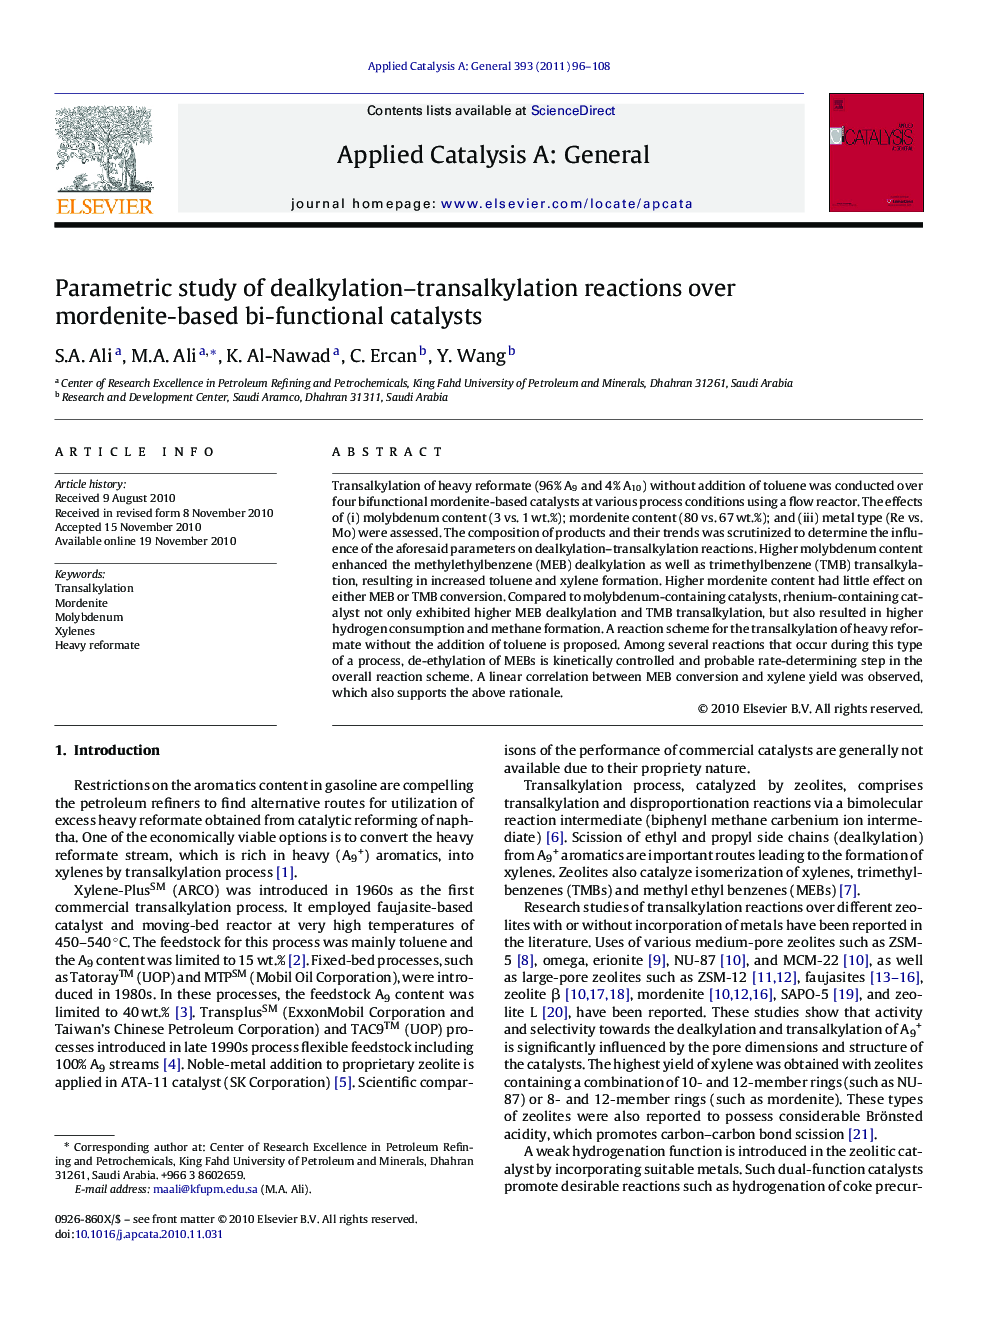 Parametric study of dealkylation–transalkylation reactions over mordenite-based bi-functional catalysts